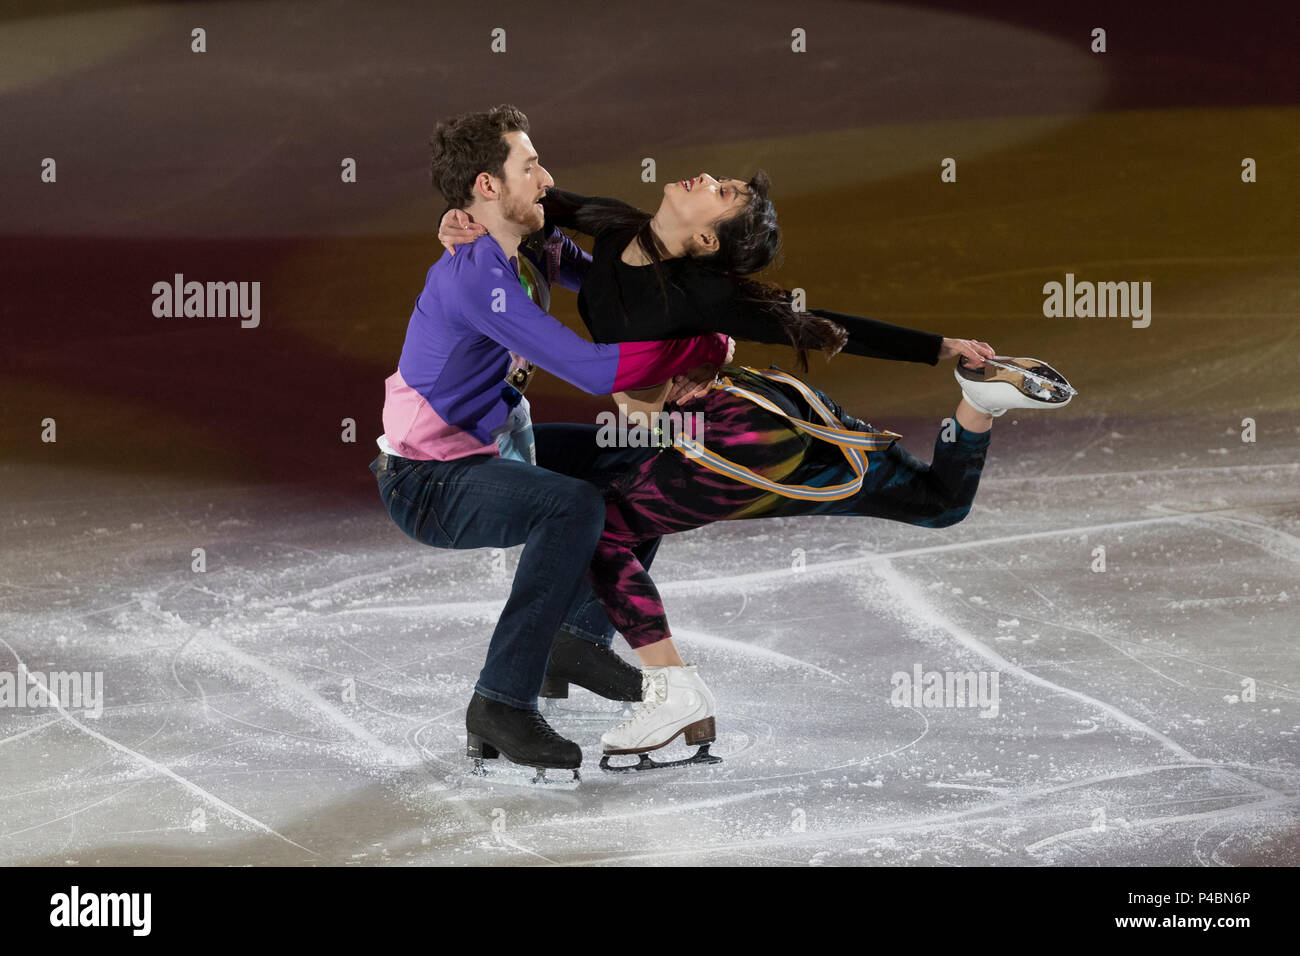 Yura Min/Alexander Gamelin (KOR) performing at the Figure Skating Gala Exhibition at the Olympic Winter Games PyeongChang 2018 Stock Photo